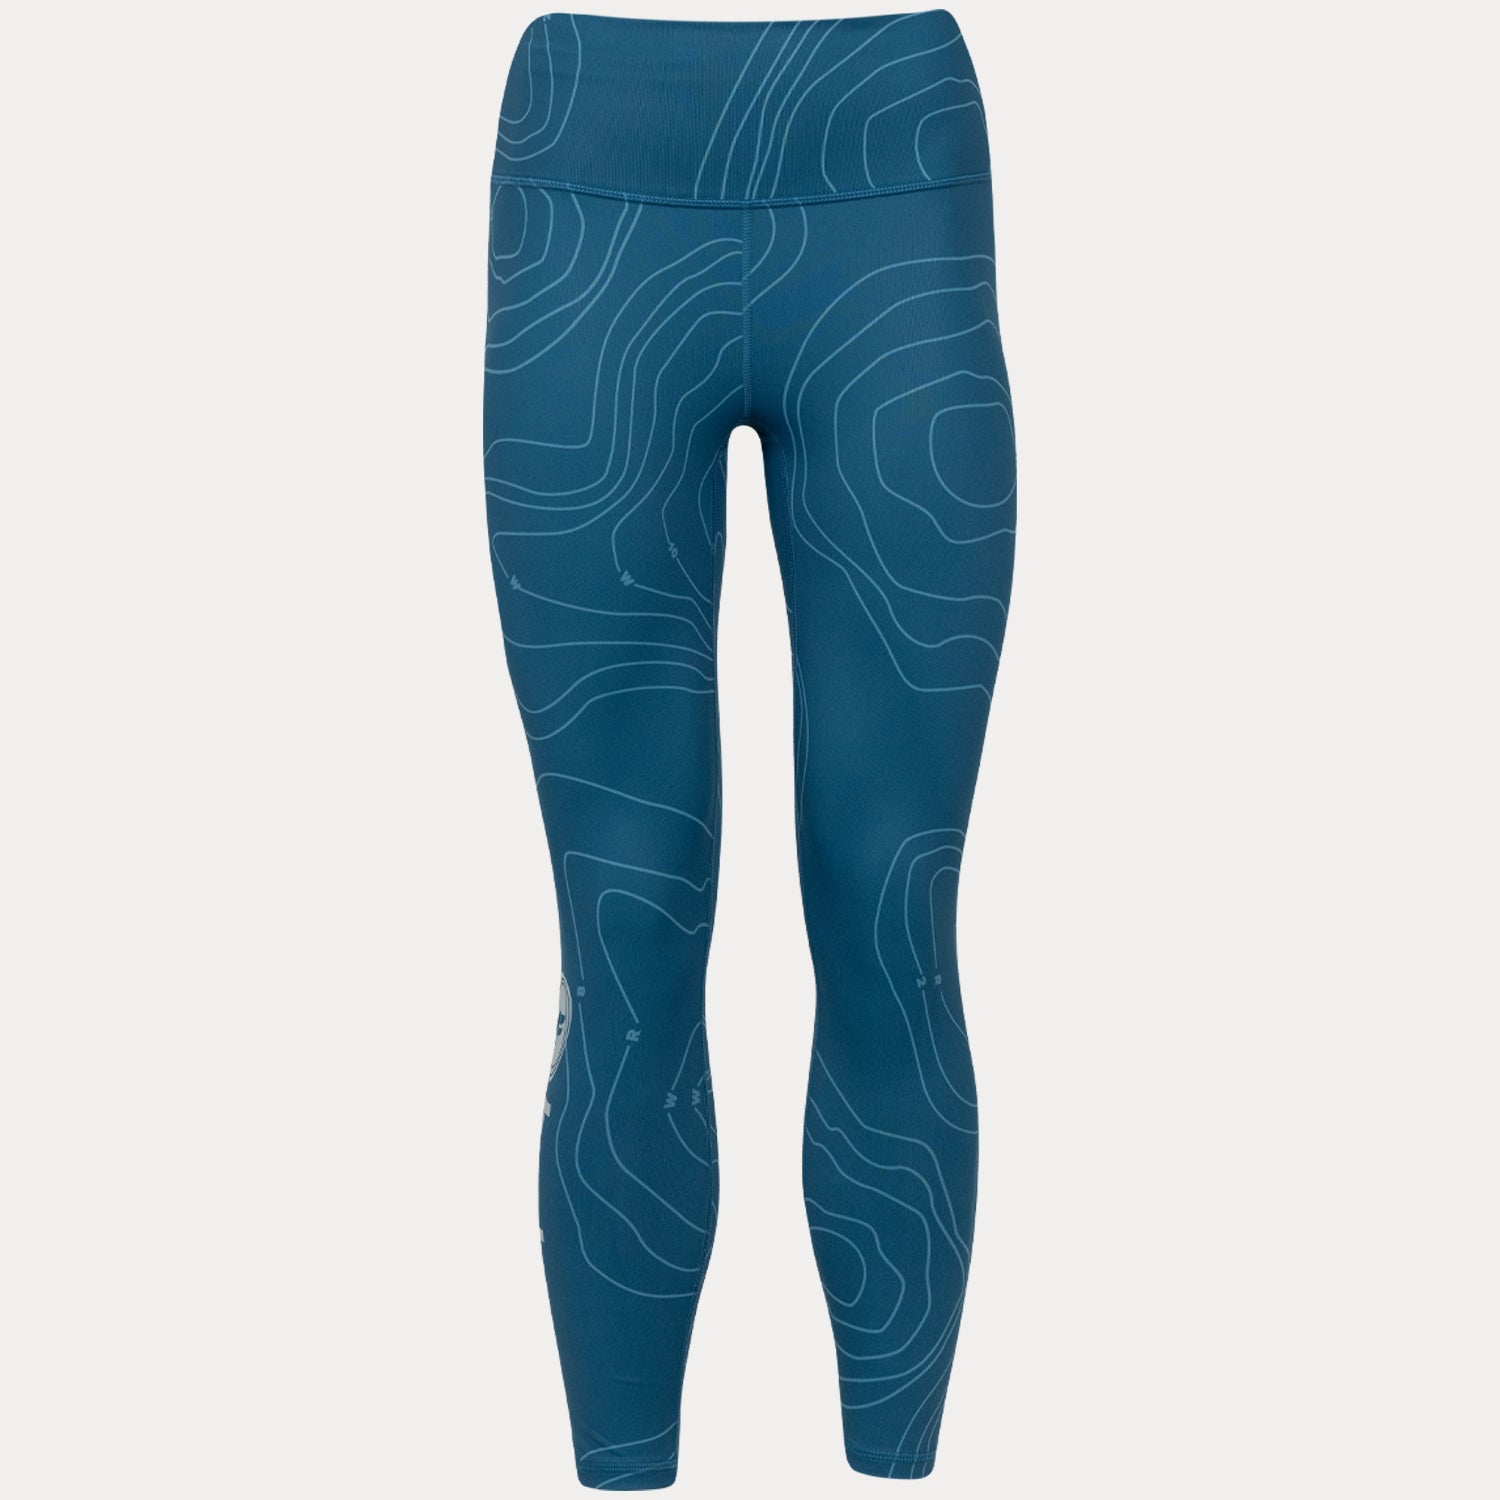 Dark blue high waisted 7/8 legging with light blue bathymetic line pattern